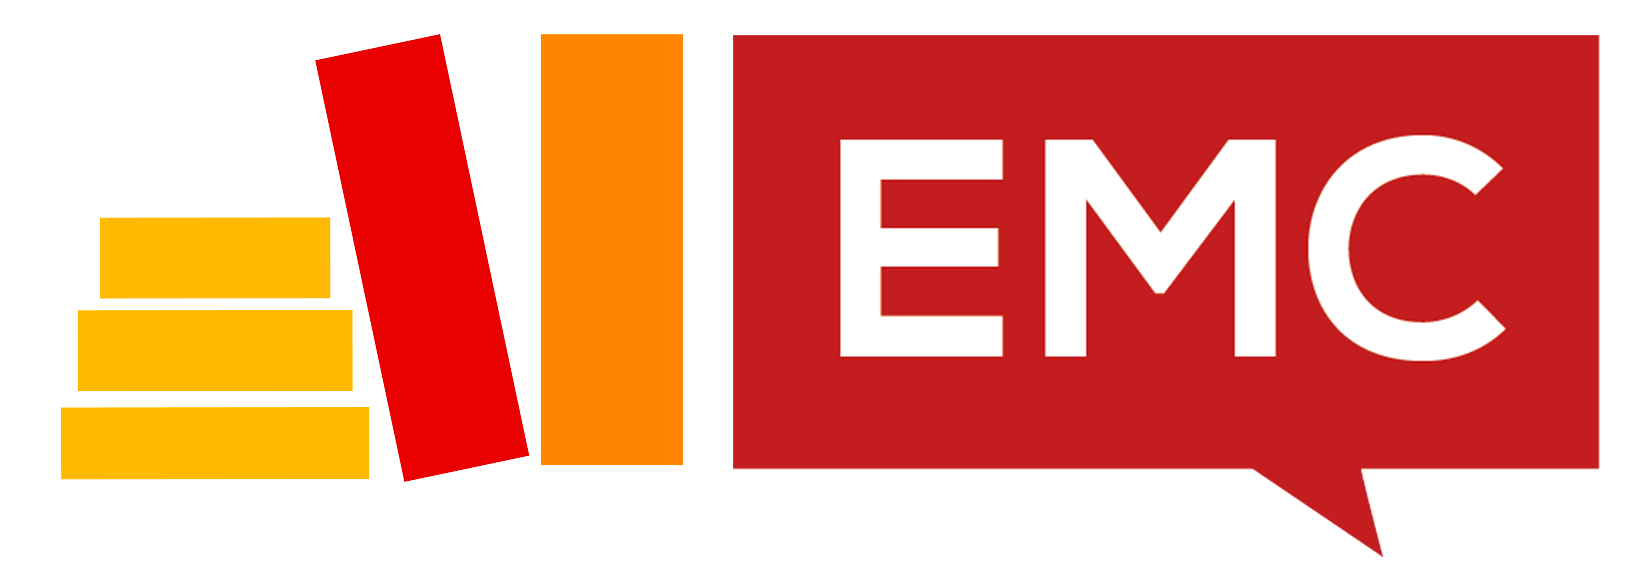 EMC Logo - EMC logo